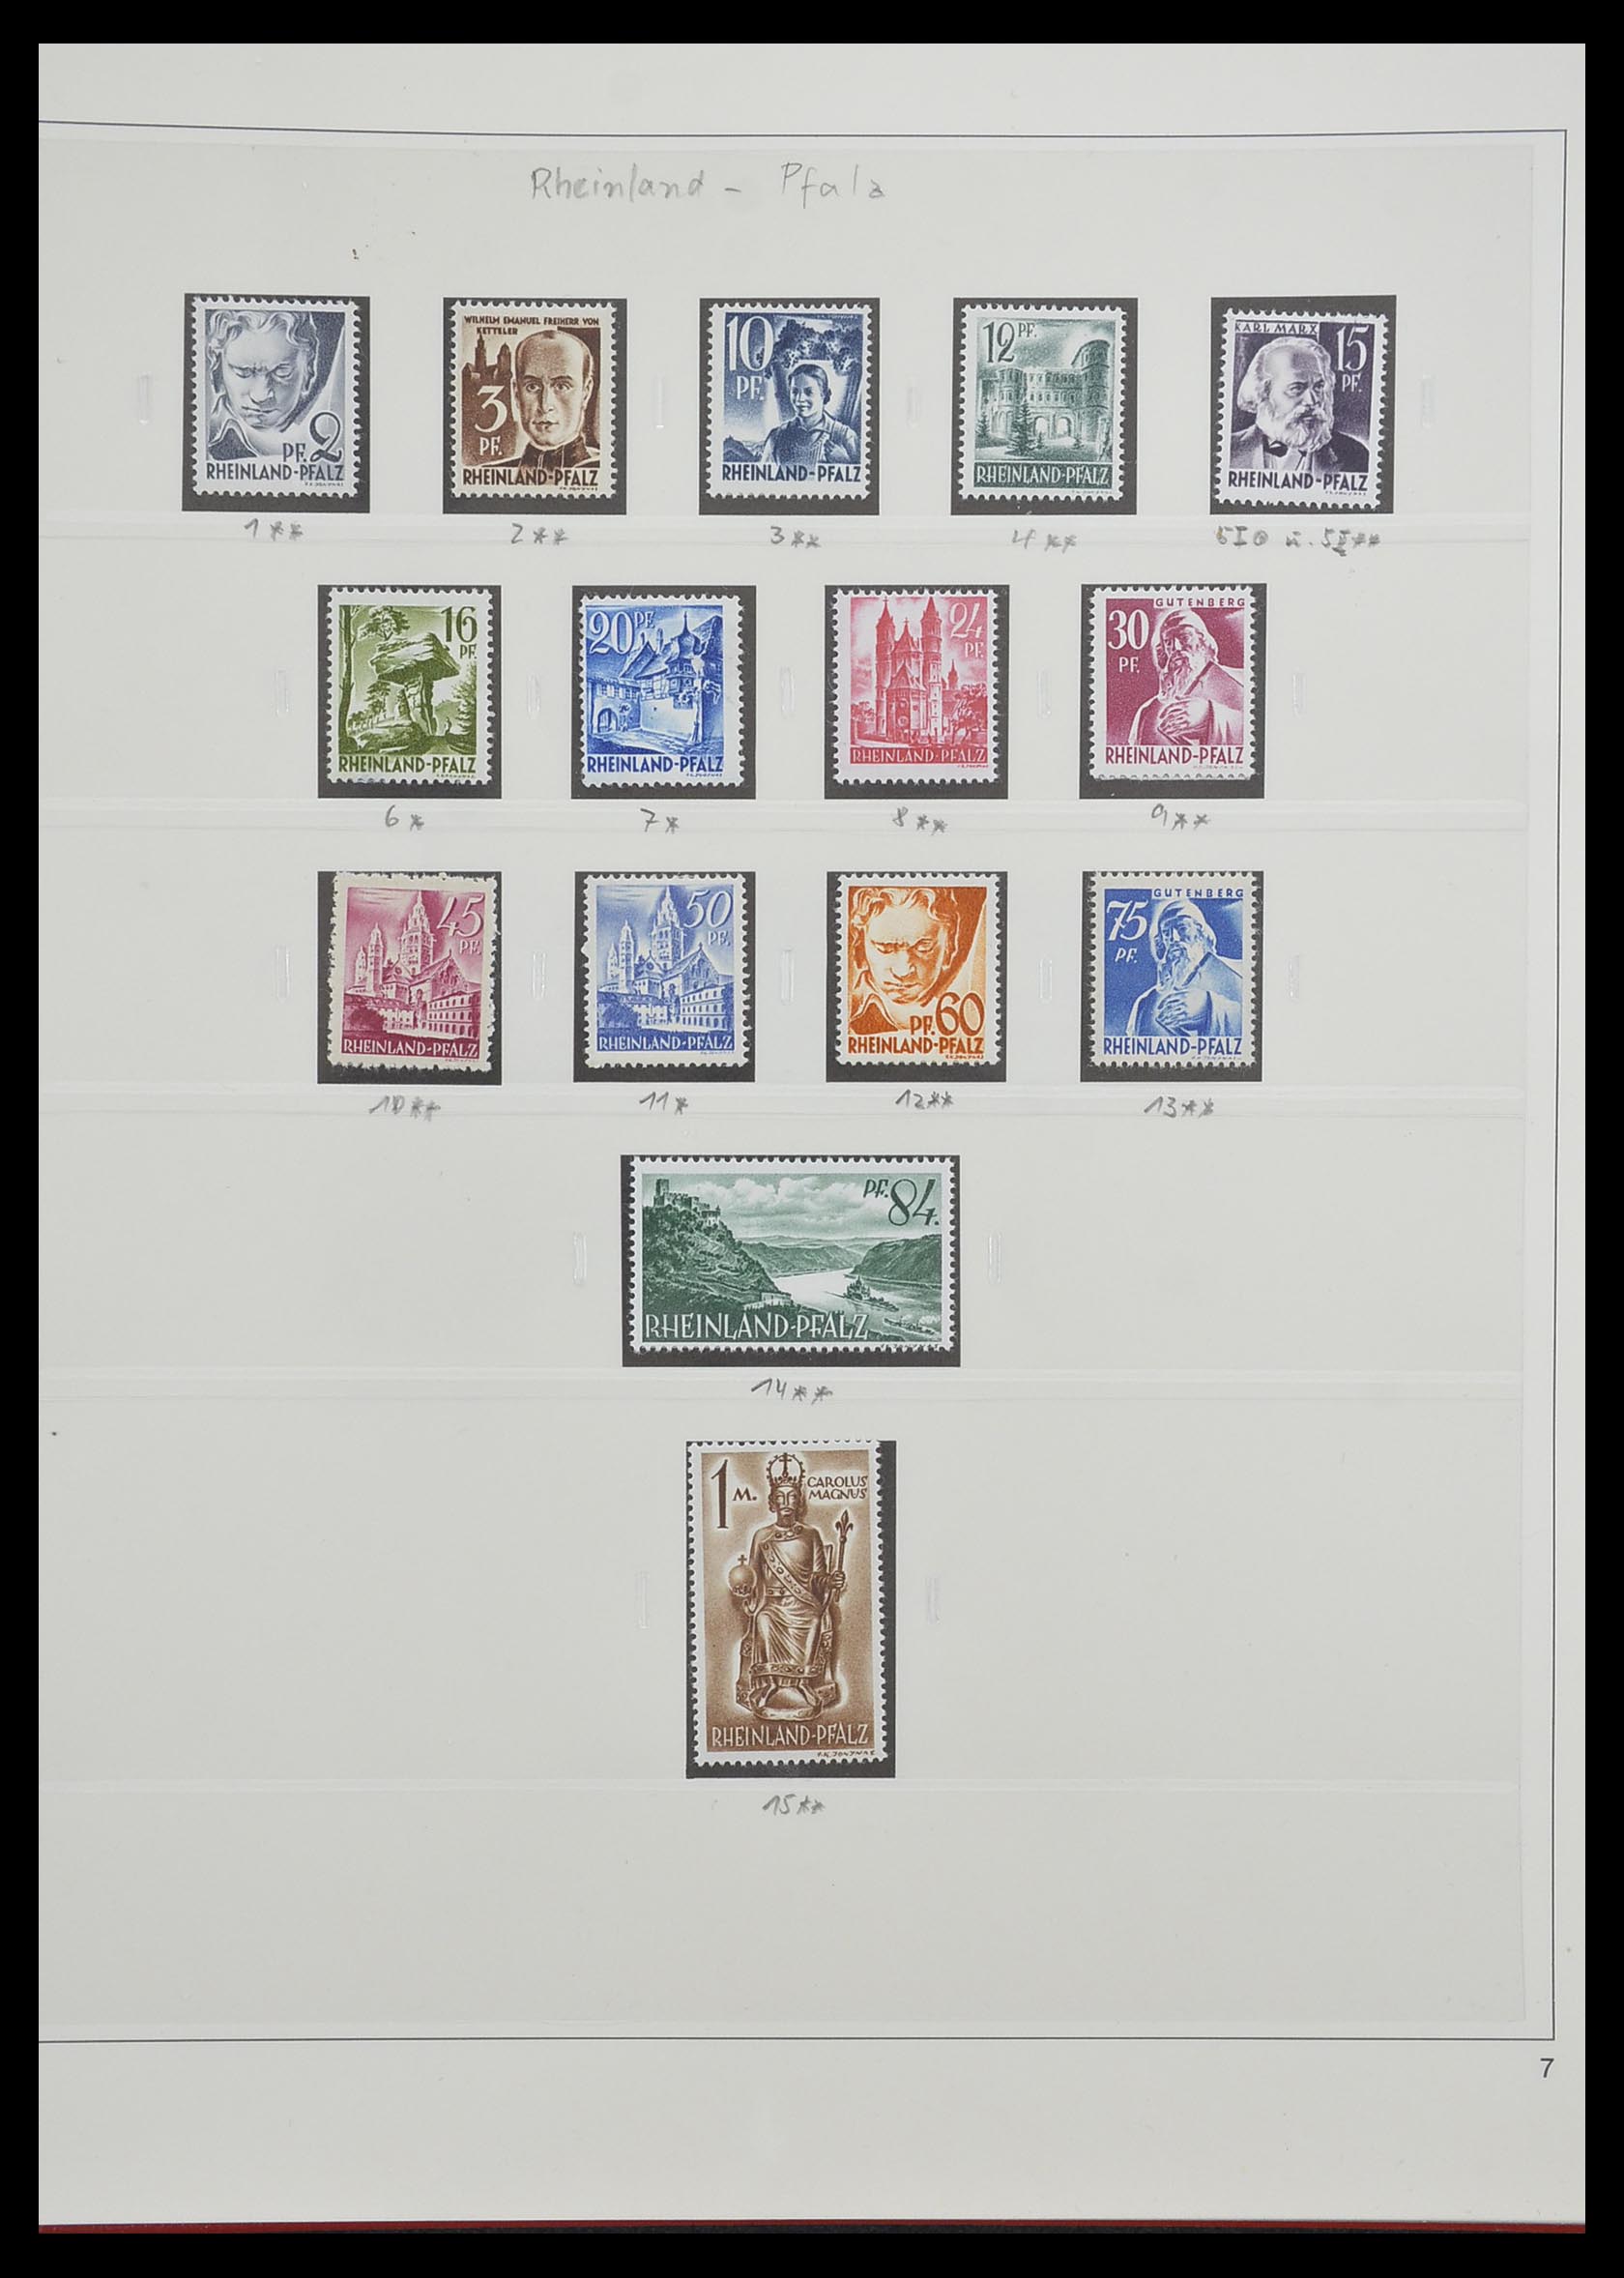 33208 023 - Stamp collection 33208 German Zones 1945-1949.